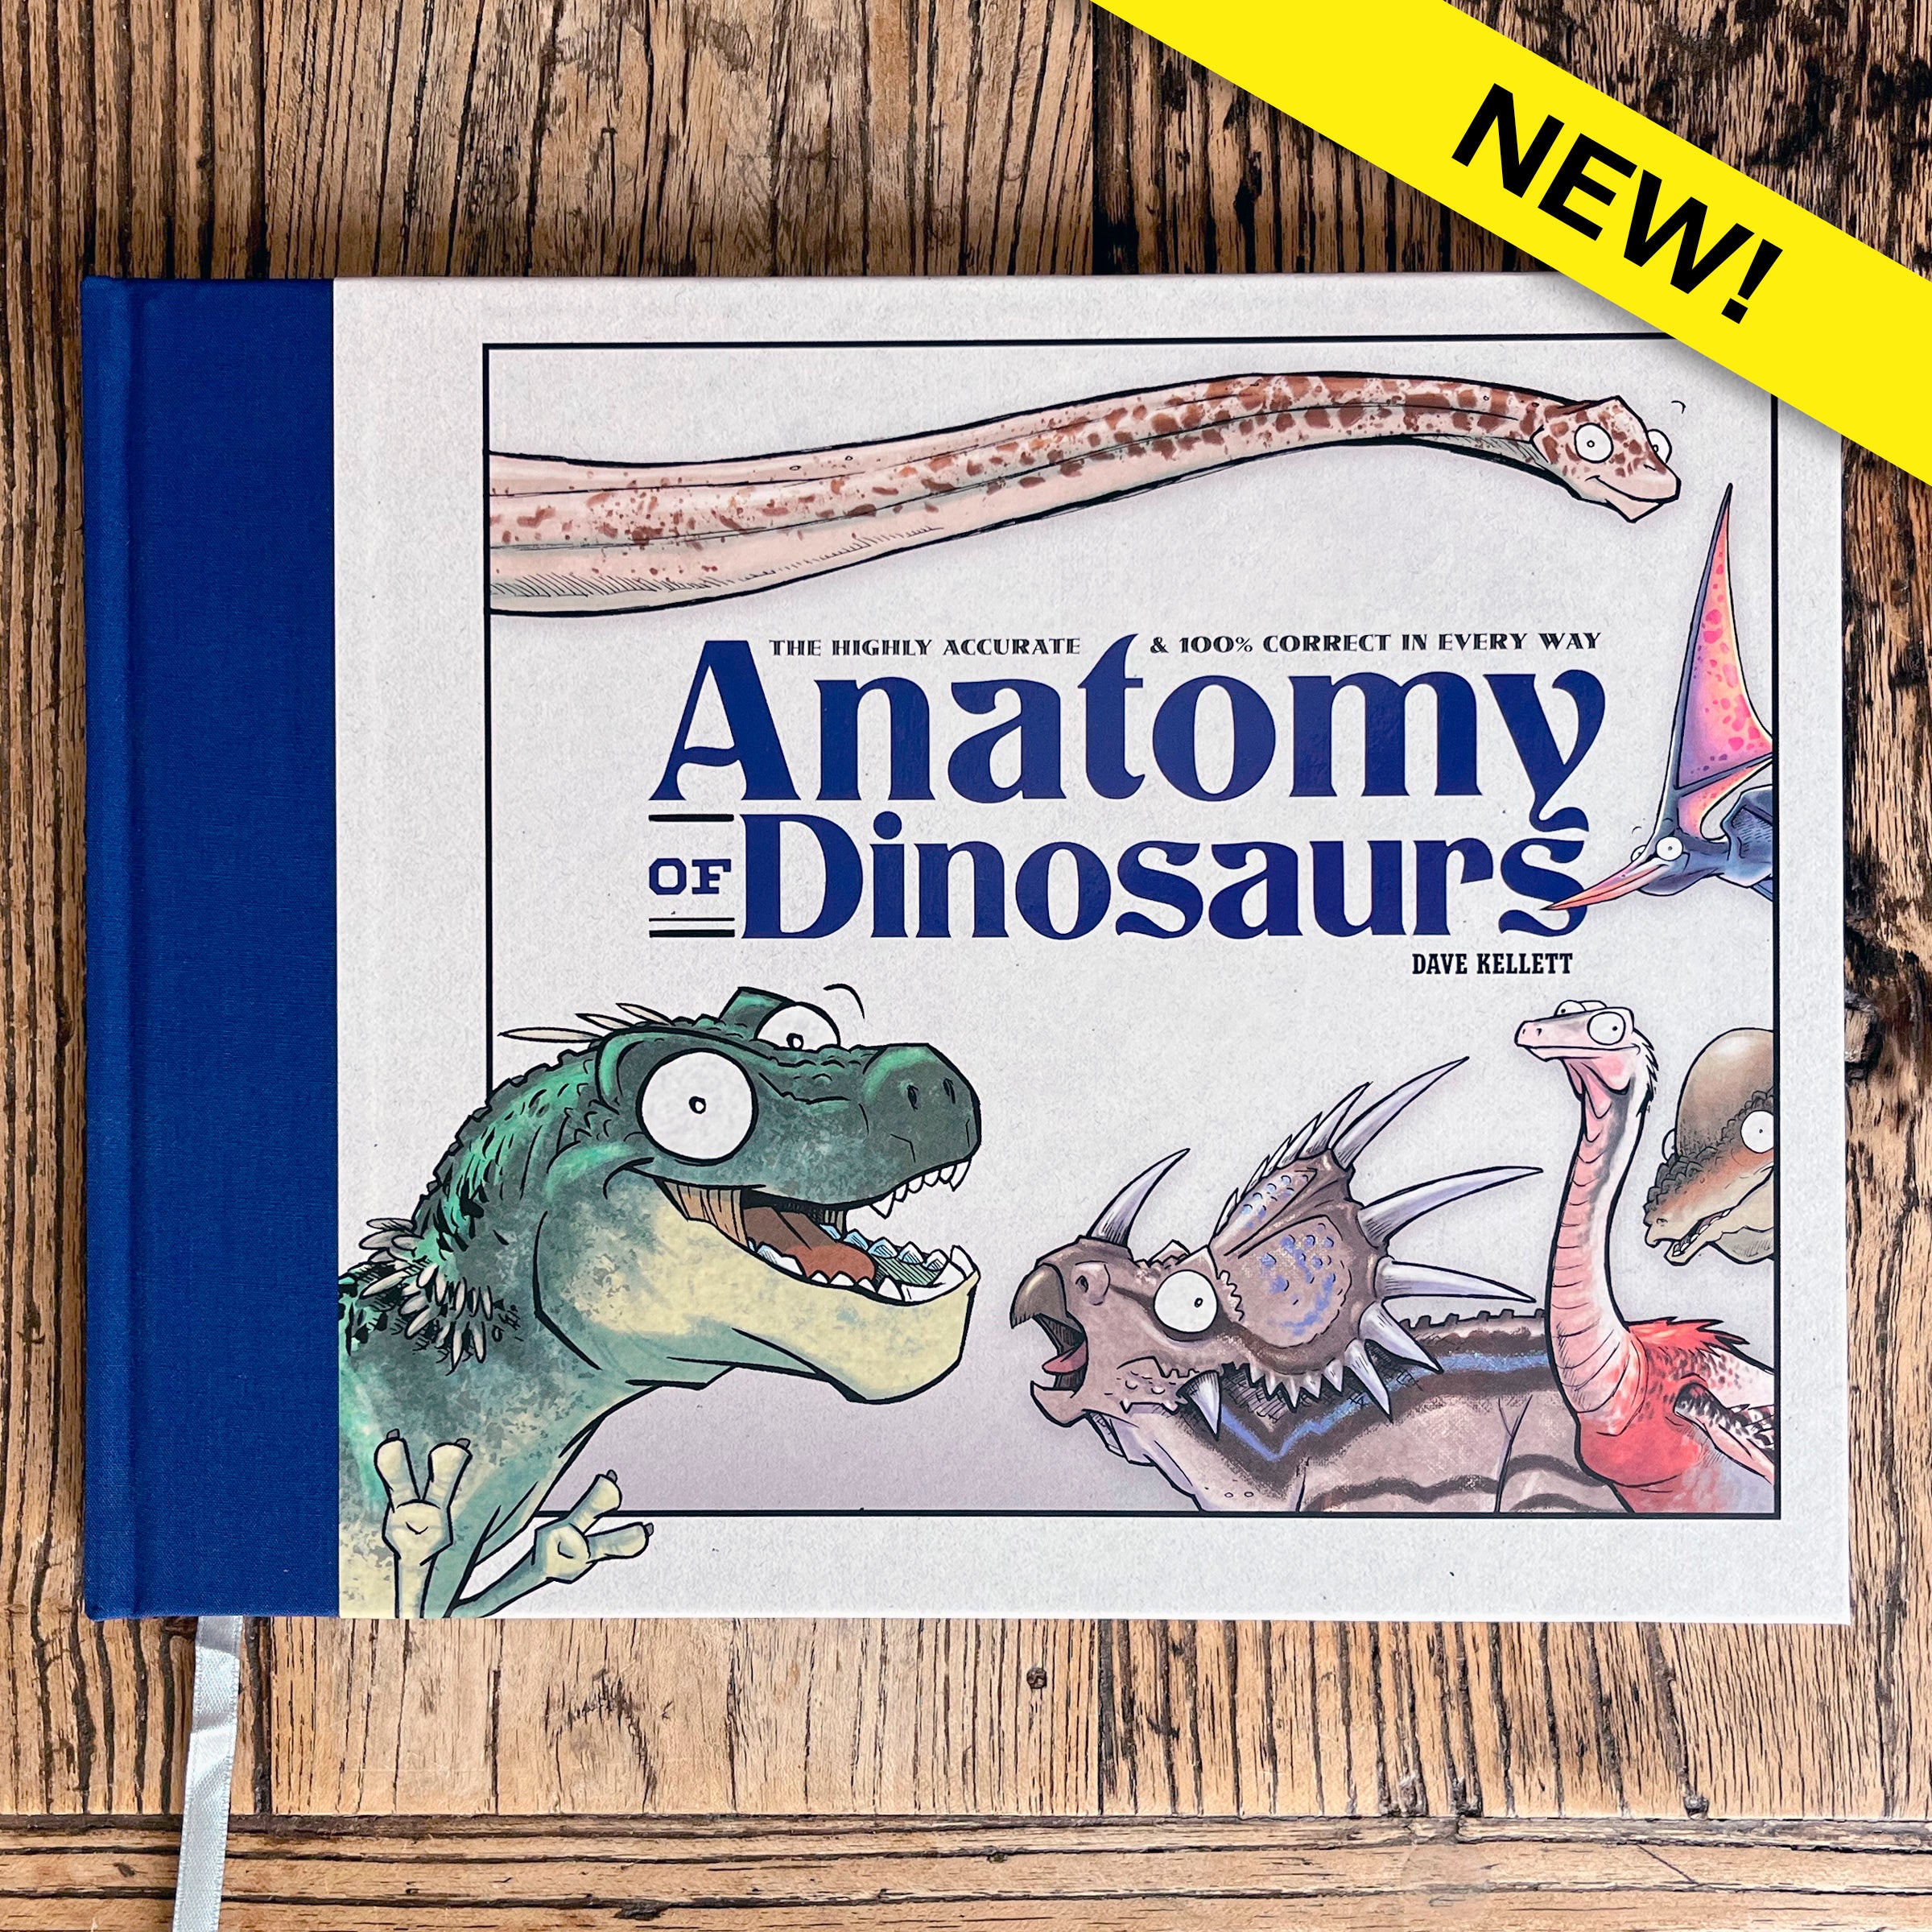 NEW! Anatomy of Dinosaurs